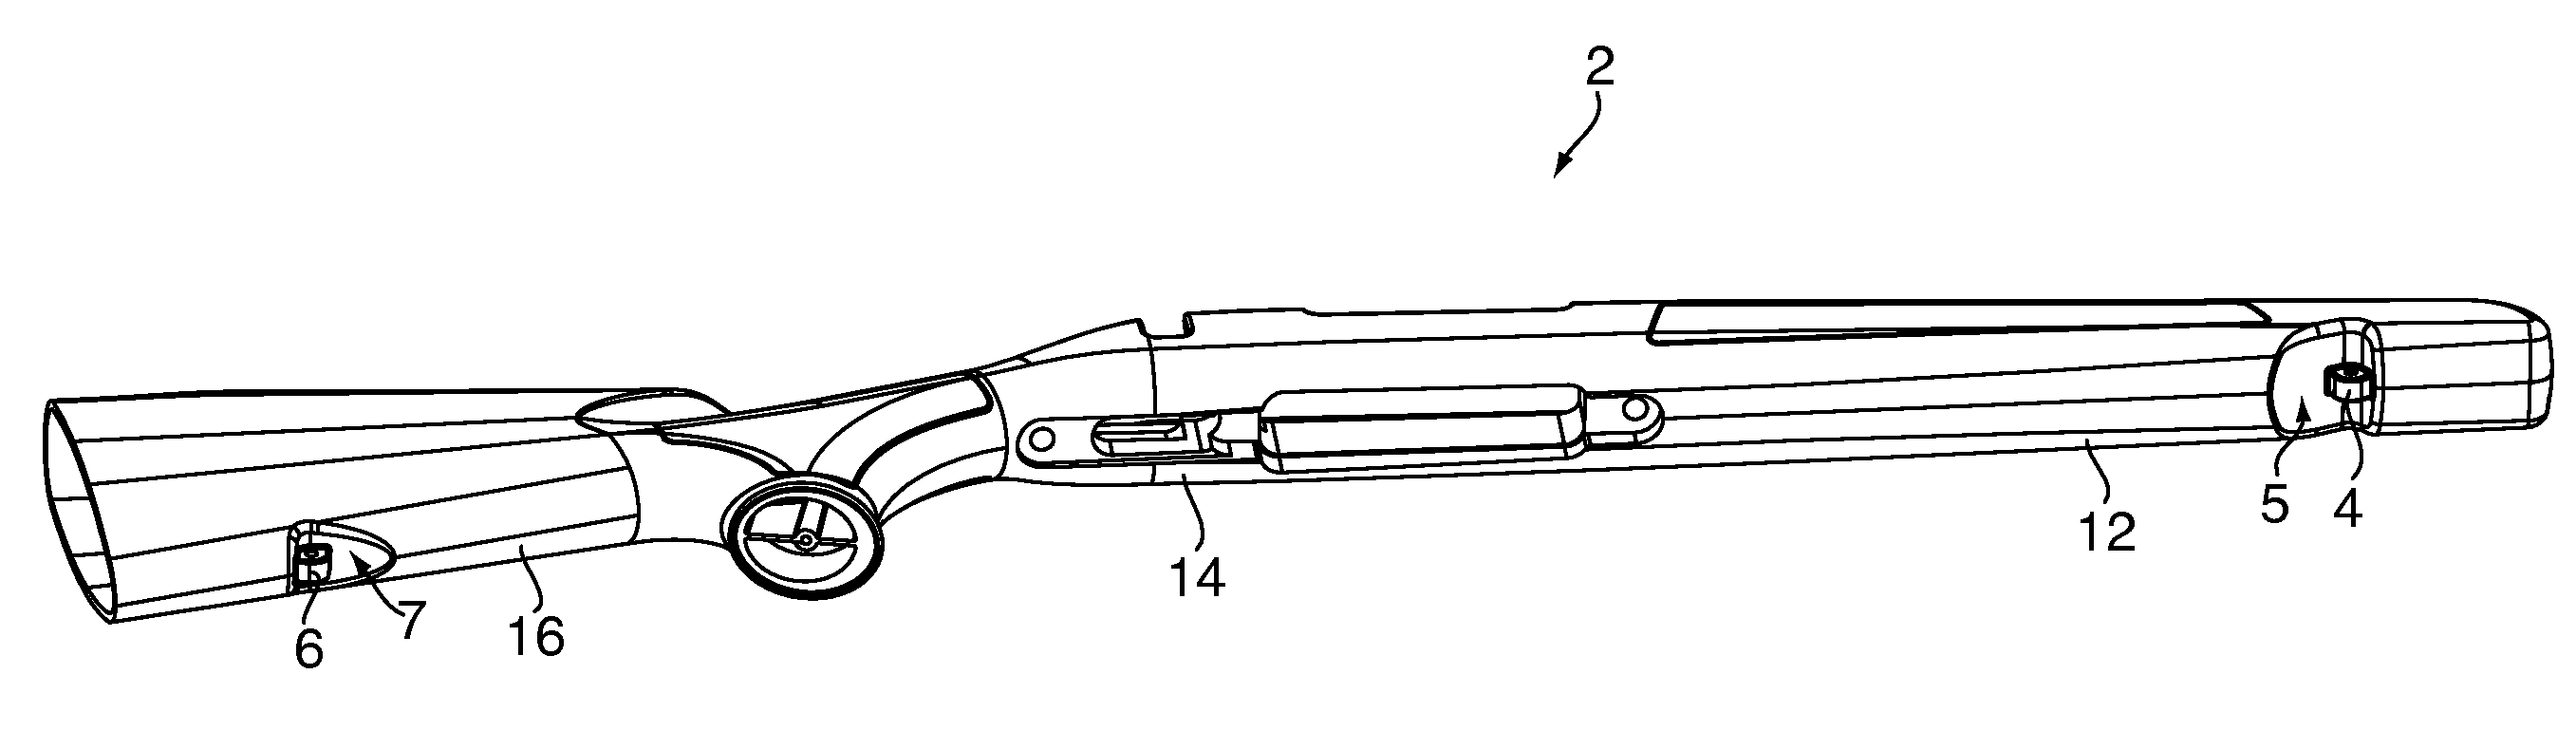 Molded rifle stock